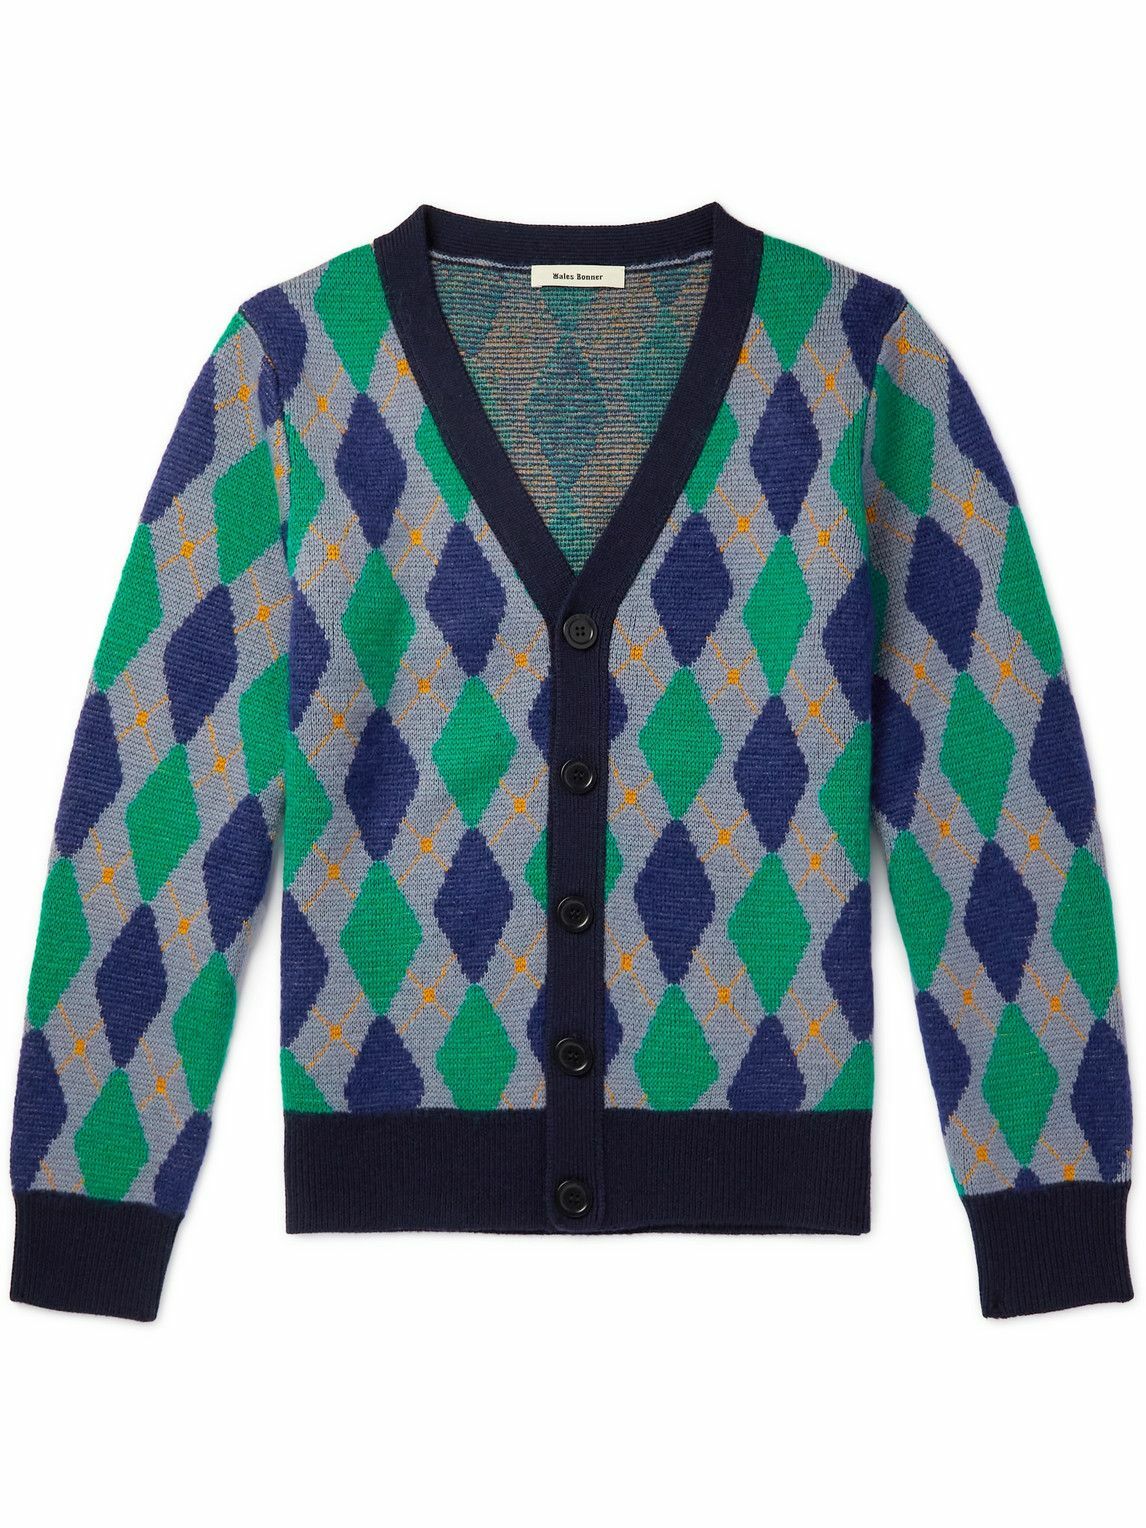 WALES BONNER 21aw Blue Argyle Sweater 3 - ニット/セーター